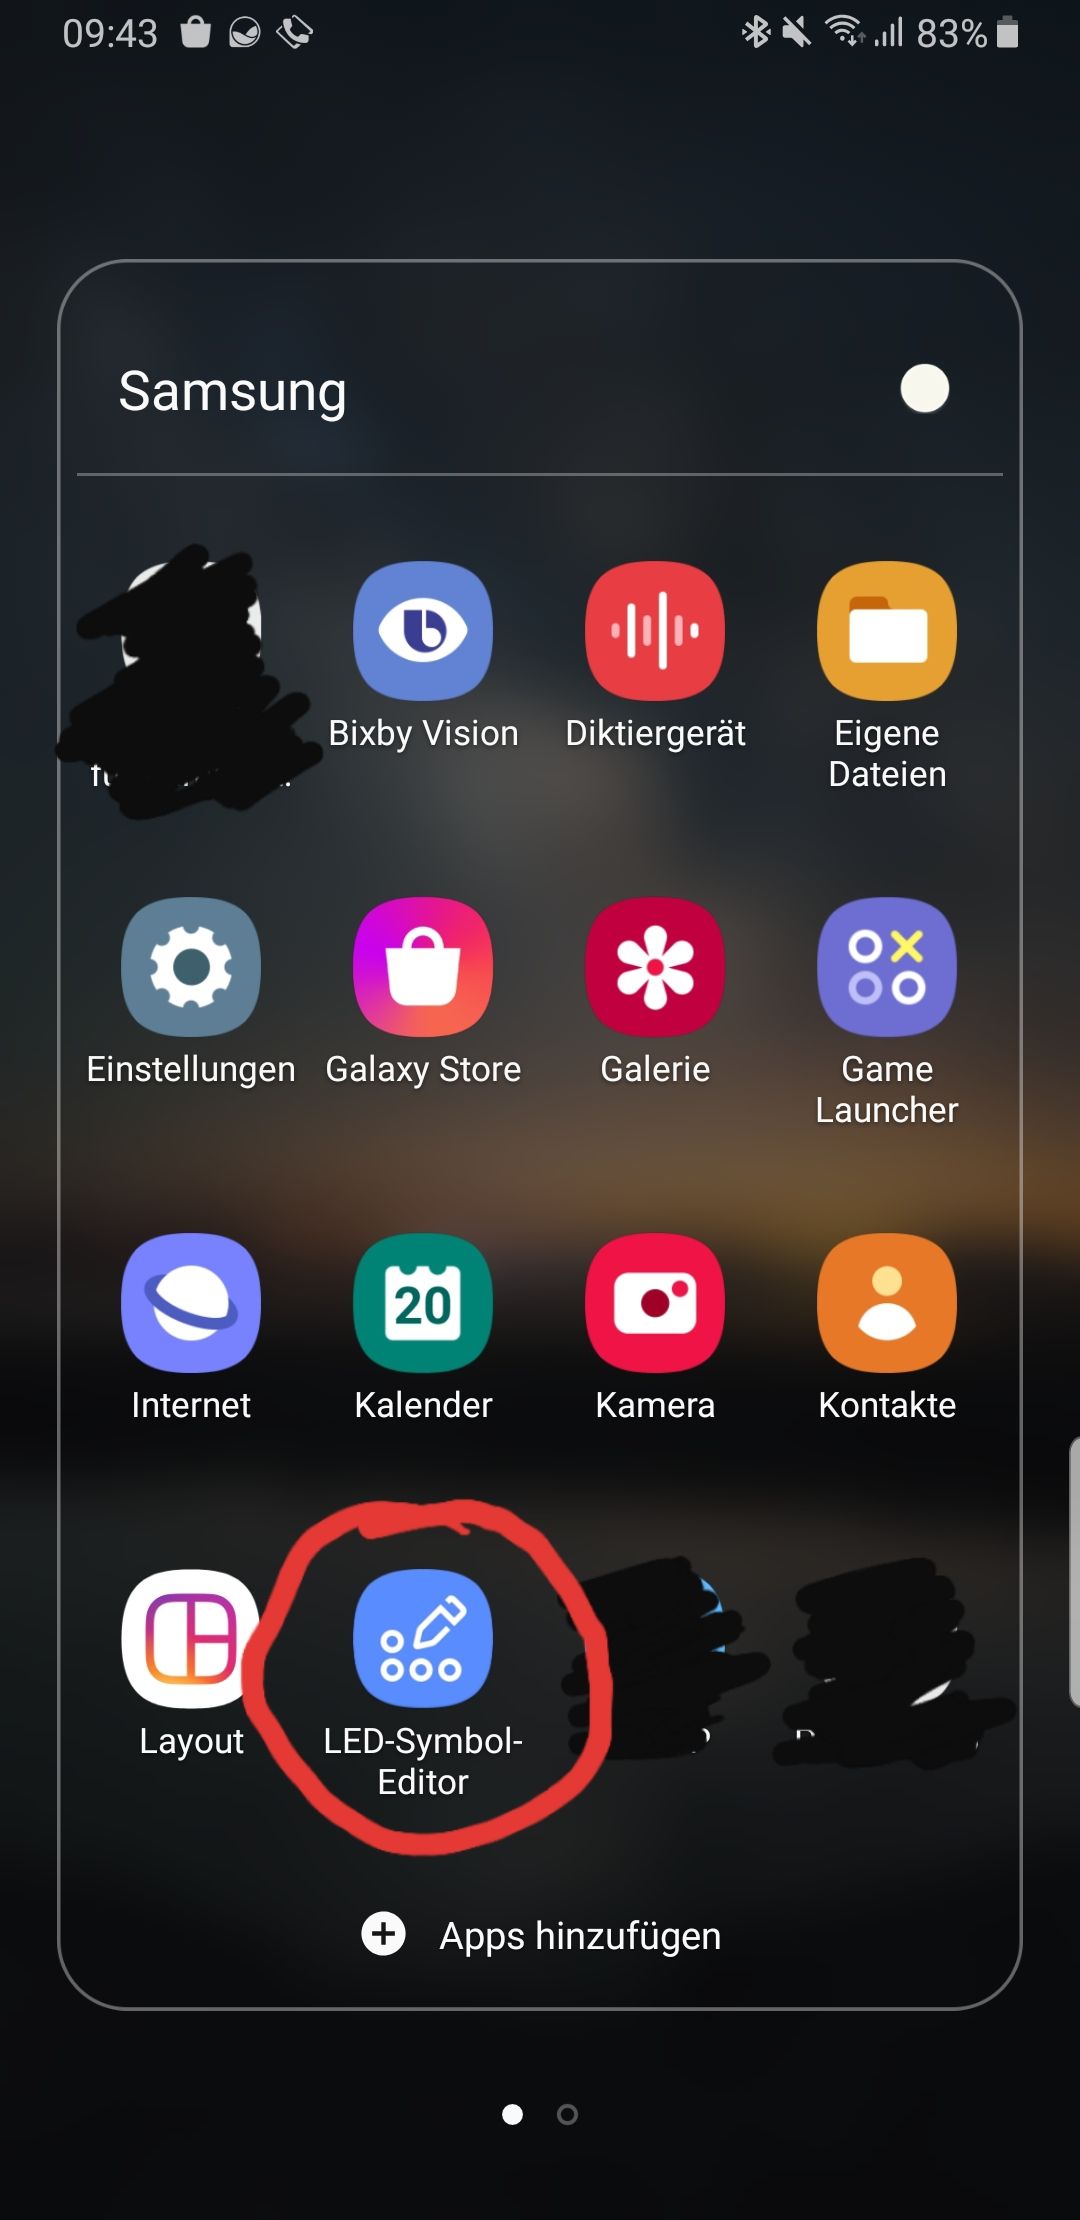 LED Cover Whats App Benachrichtigung - Samsung Community